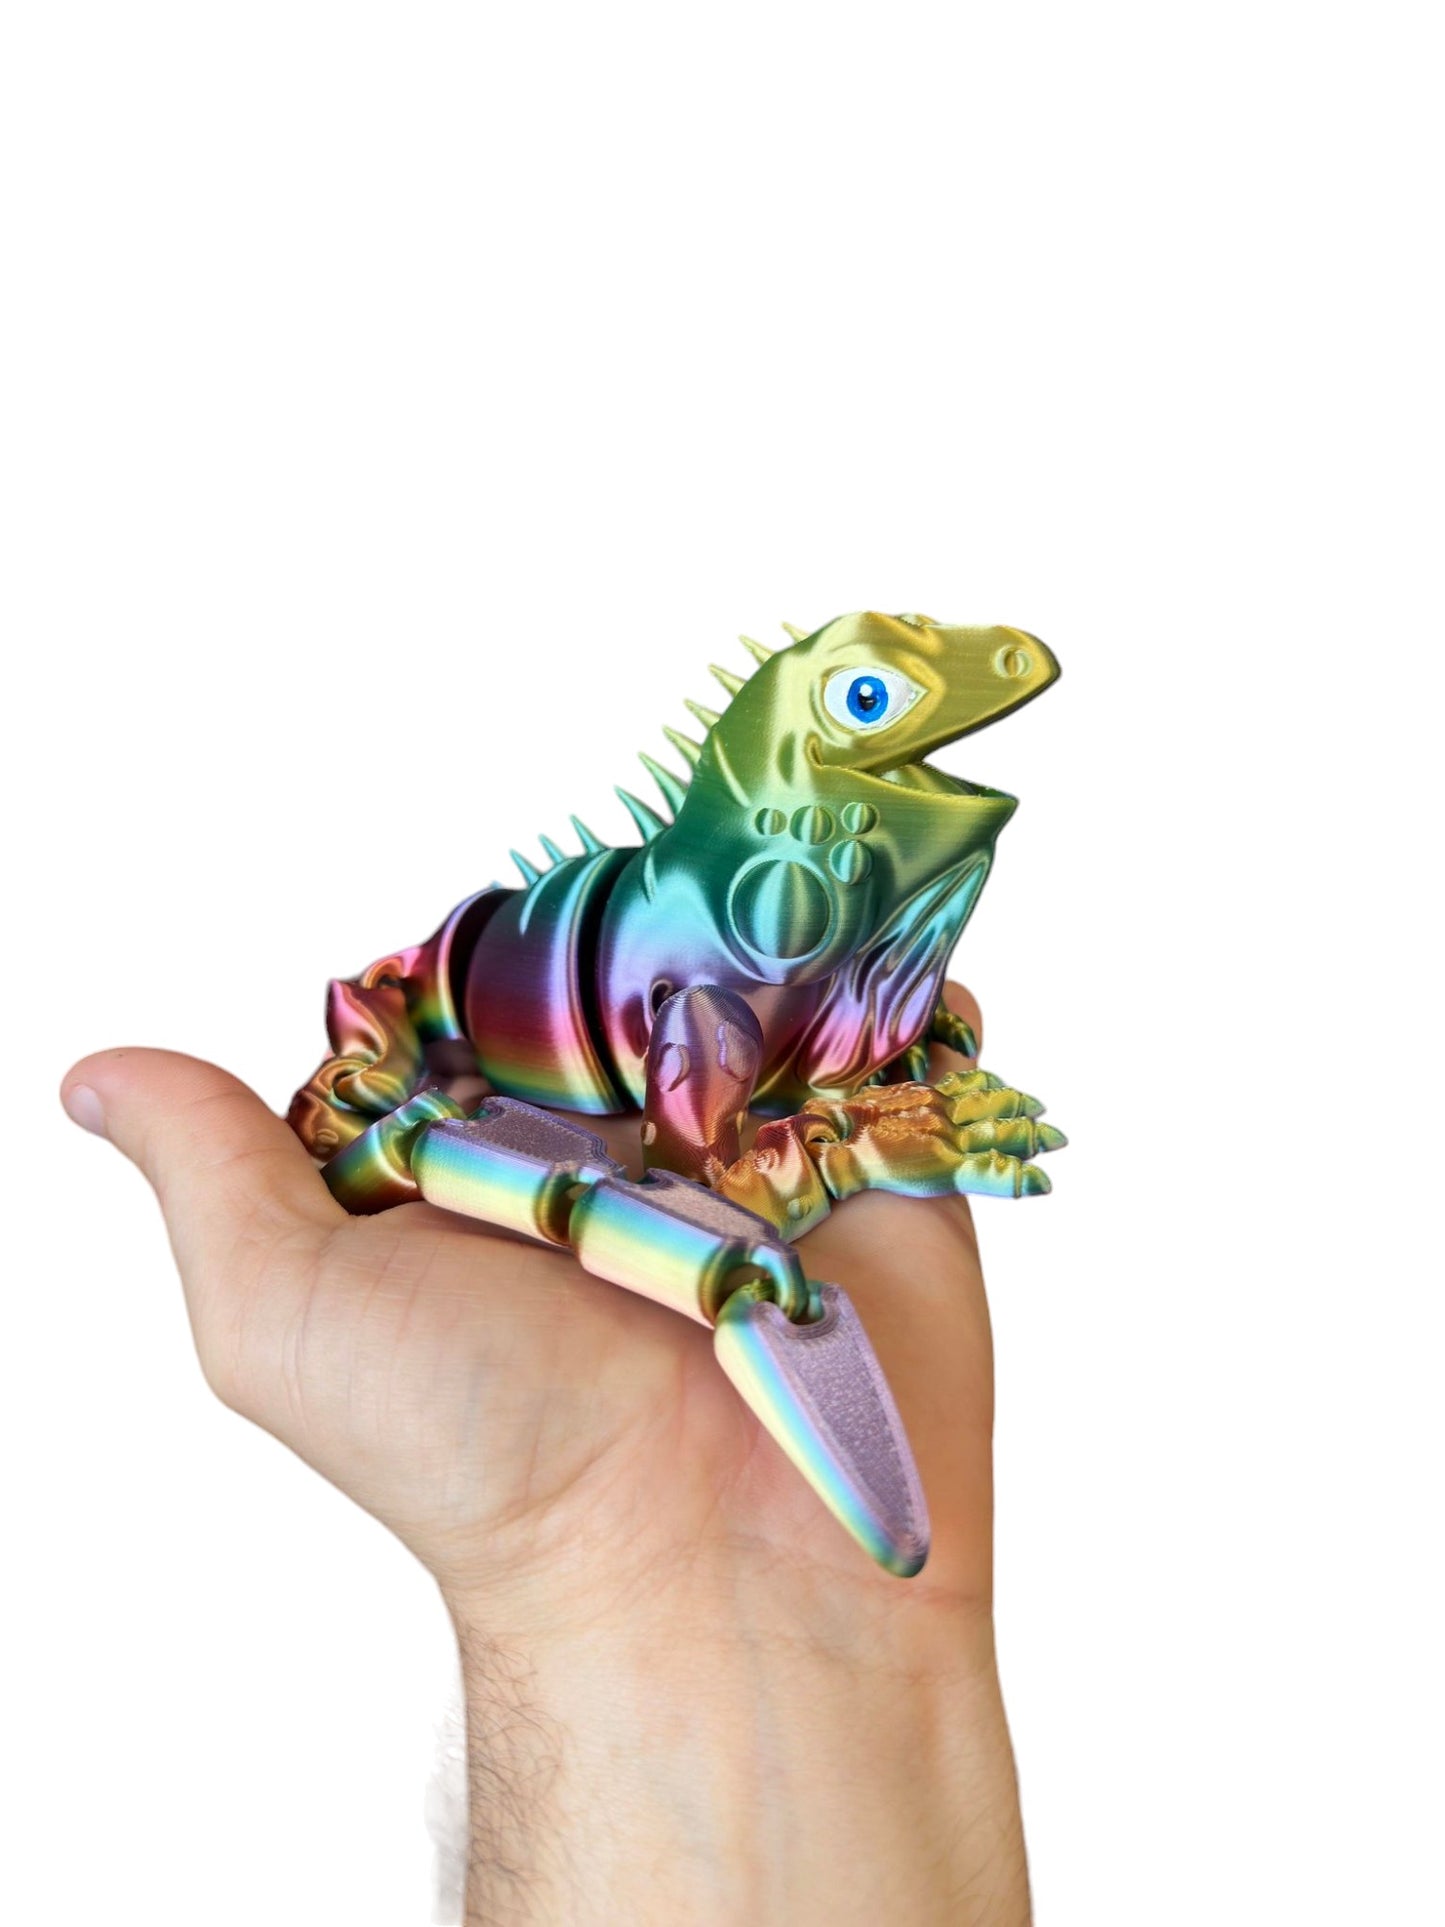 3D Printed Iguana